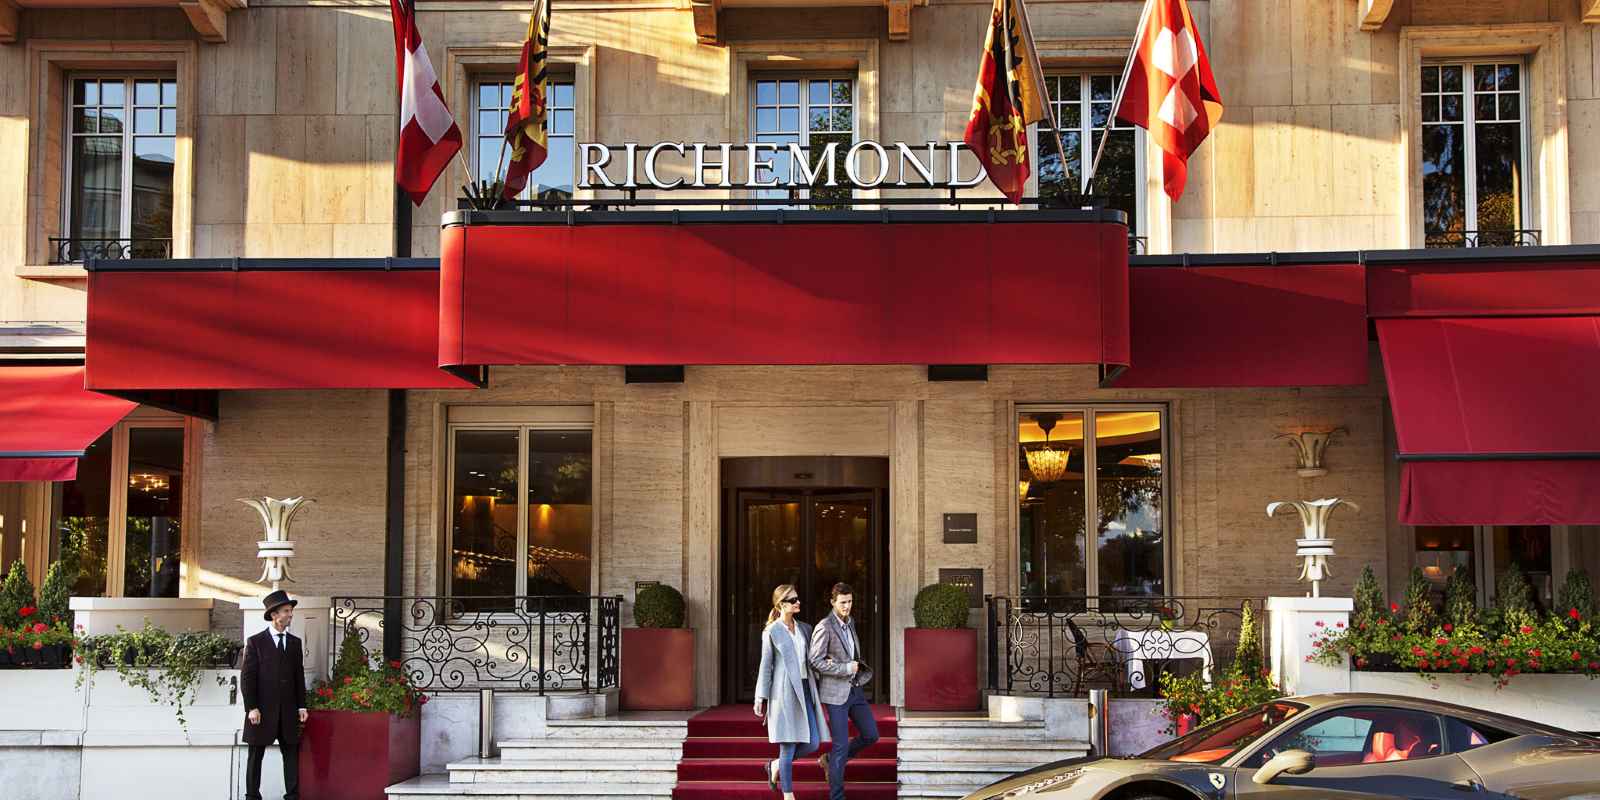 Hotel Richemond in Geneva